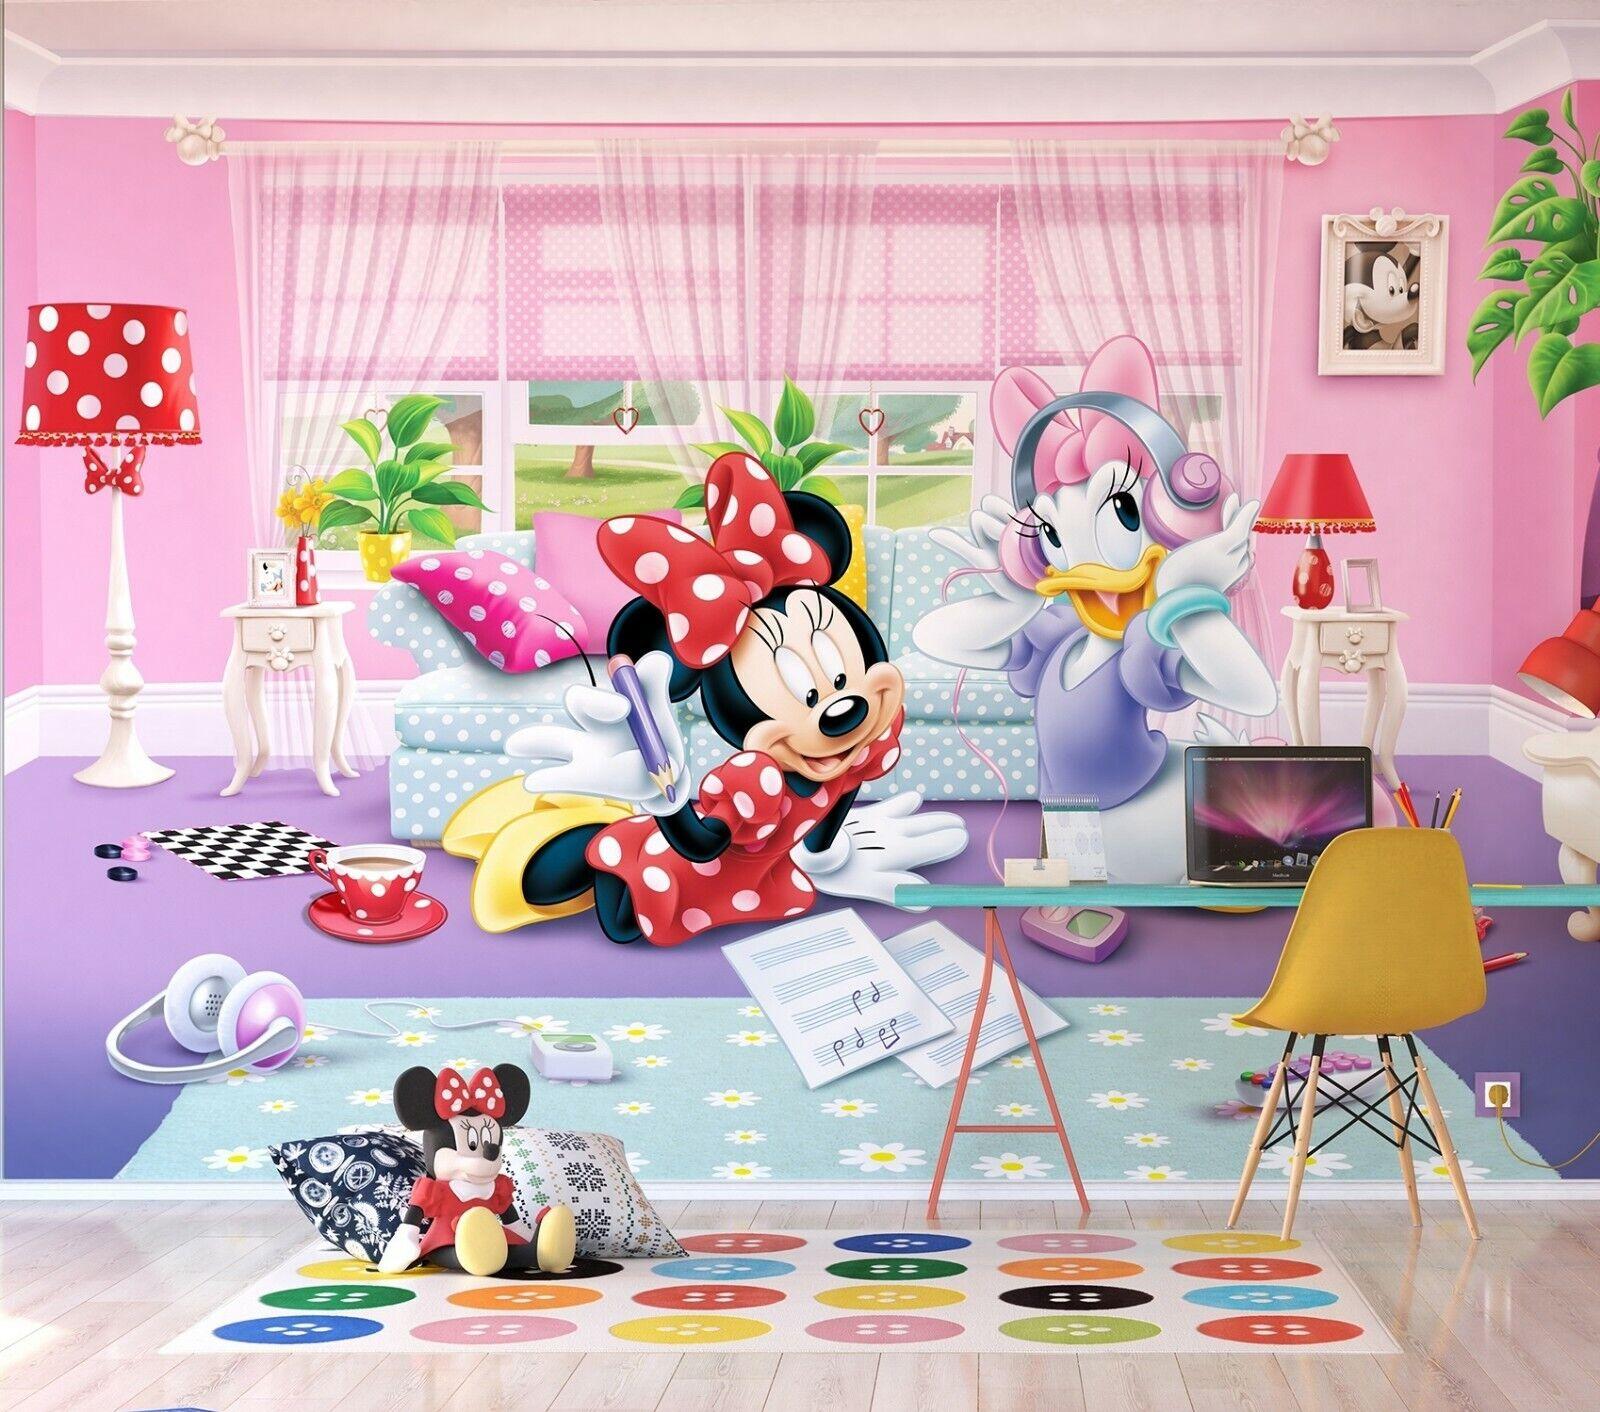 Kids room wall Mural photo wallpaper 360x270cm Disney Minnie and